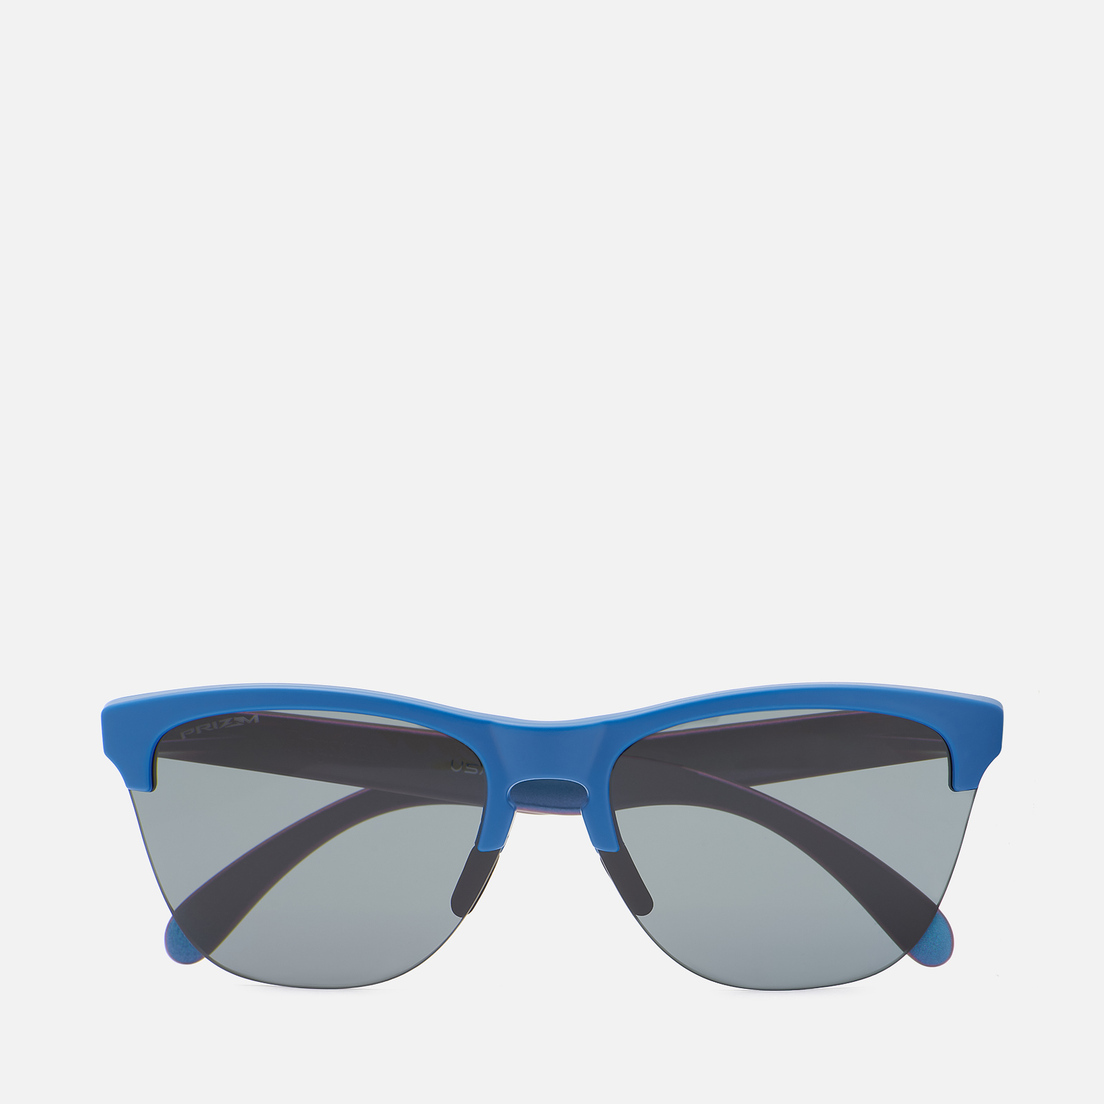 Oakley Солнцезащитные очки Frogskins Lite